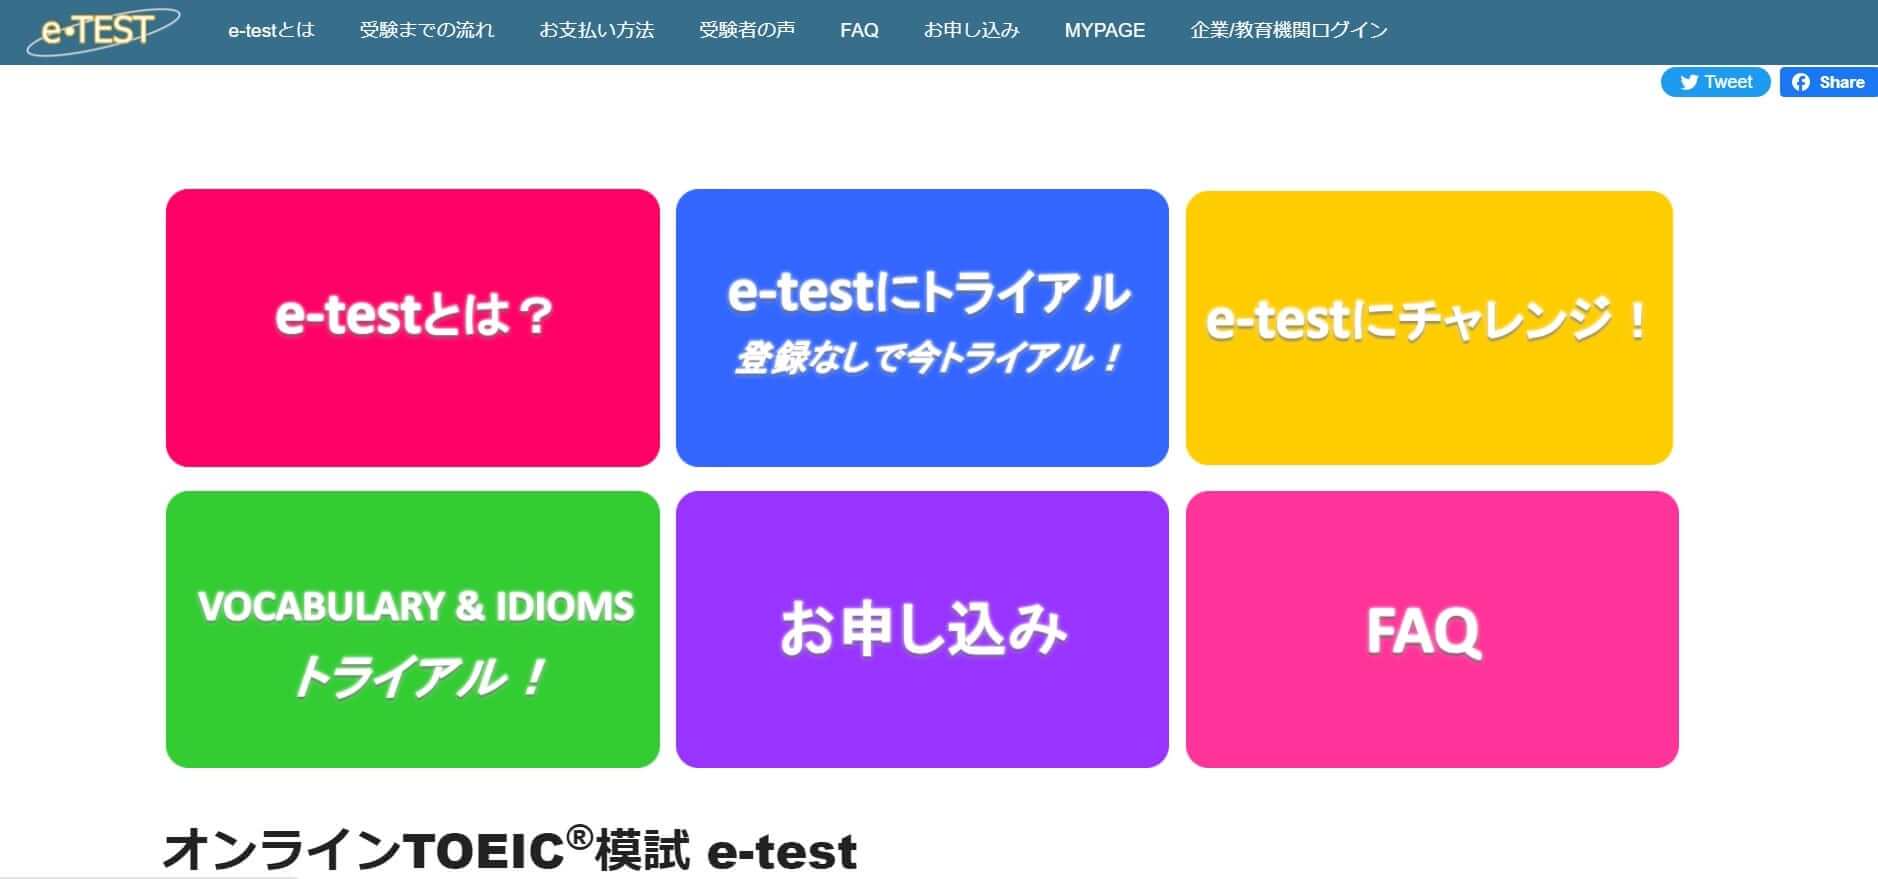 「E-test」のスクショ画像